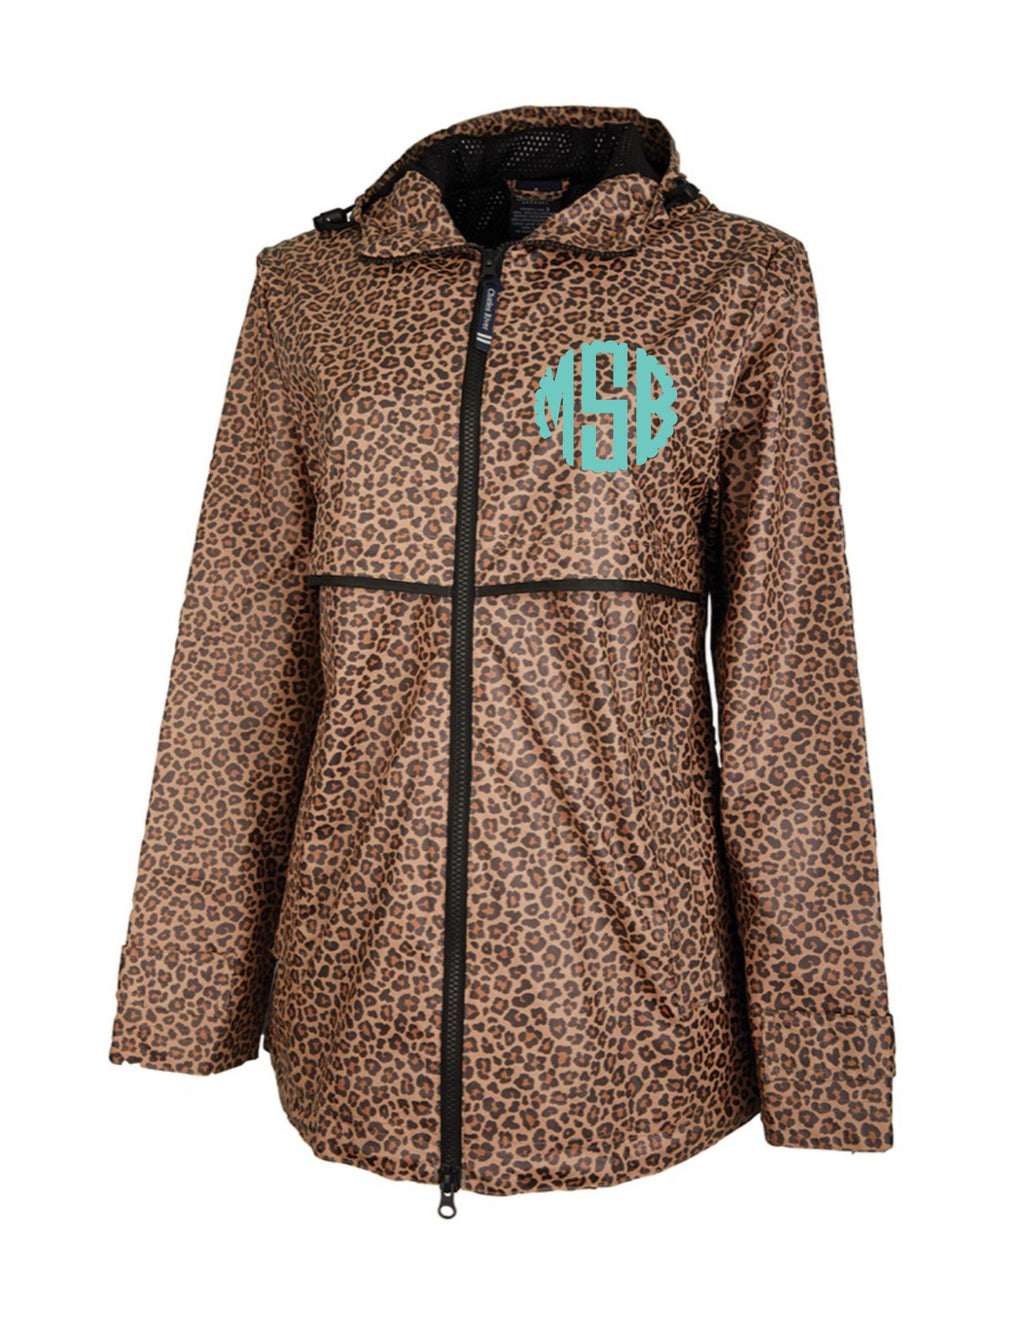 Charles River New Englander Rain Jacket, Leopard - Monogram Market